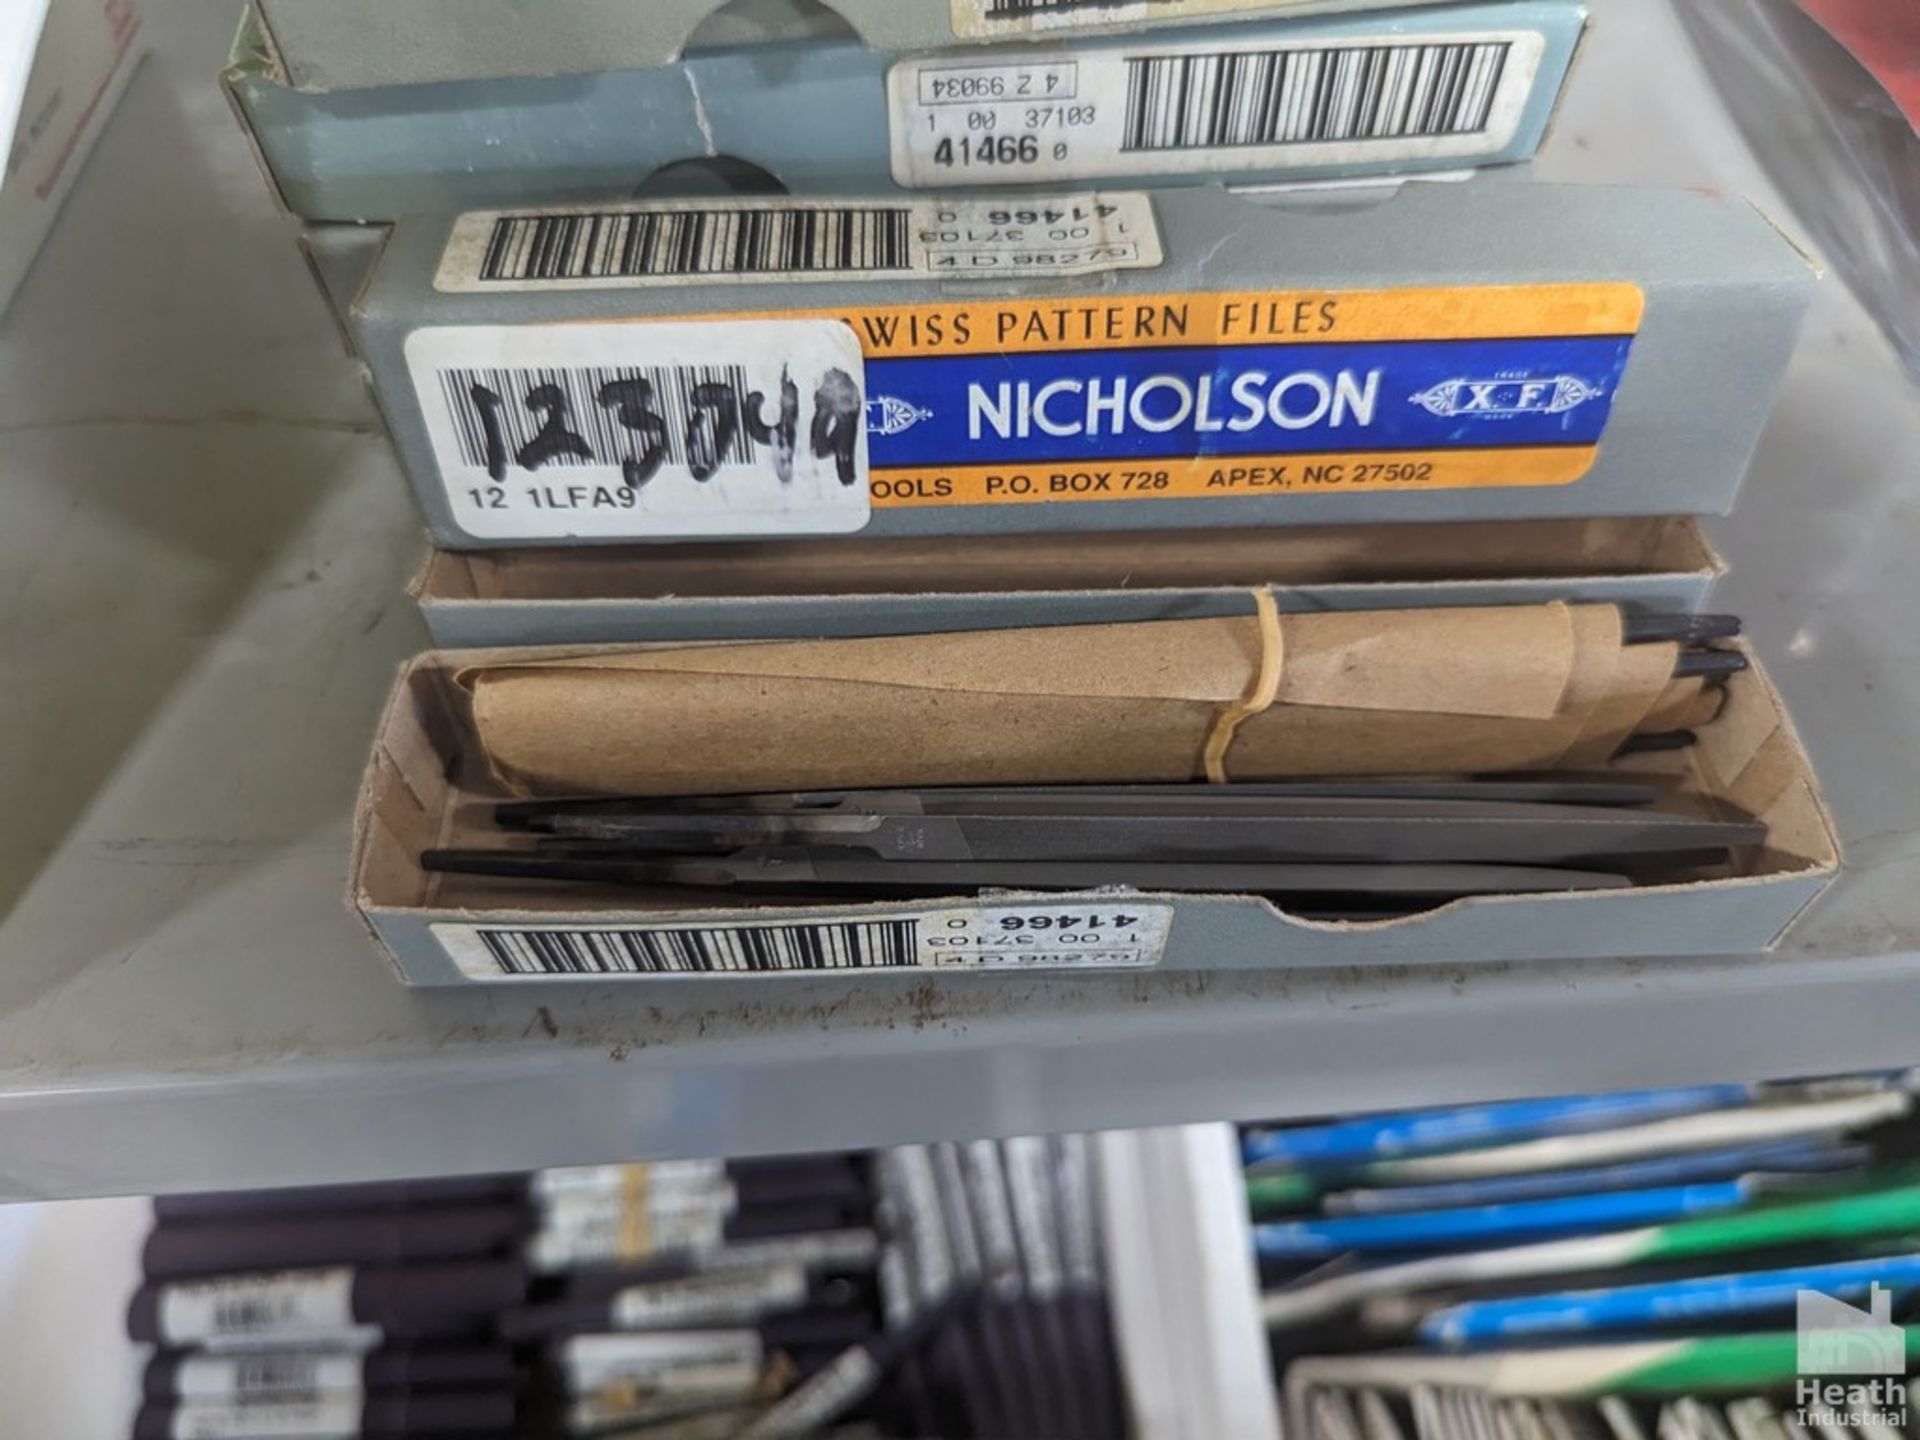 (2) BOXES OF NICHOLSON 41466 SWISS PATTERN FILES (TWELVE PER BOX, TWENTY-FOUR TOTAL)